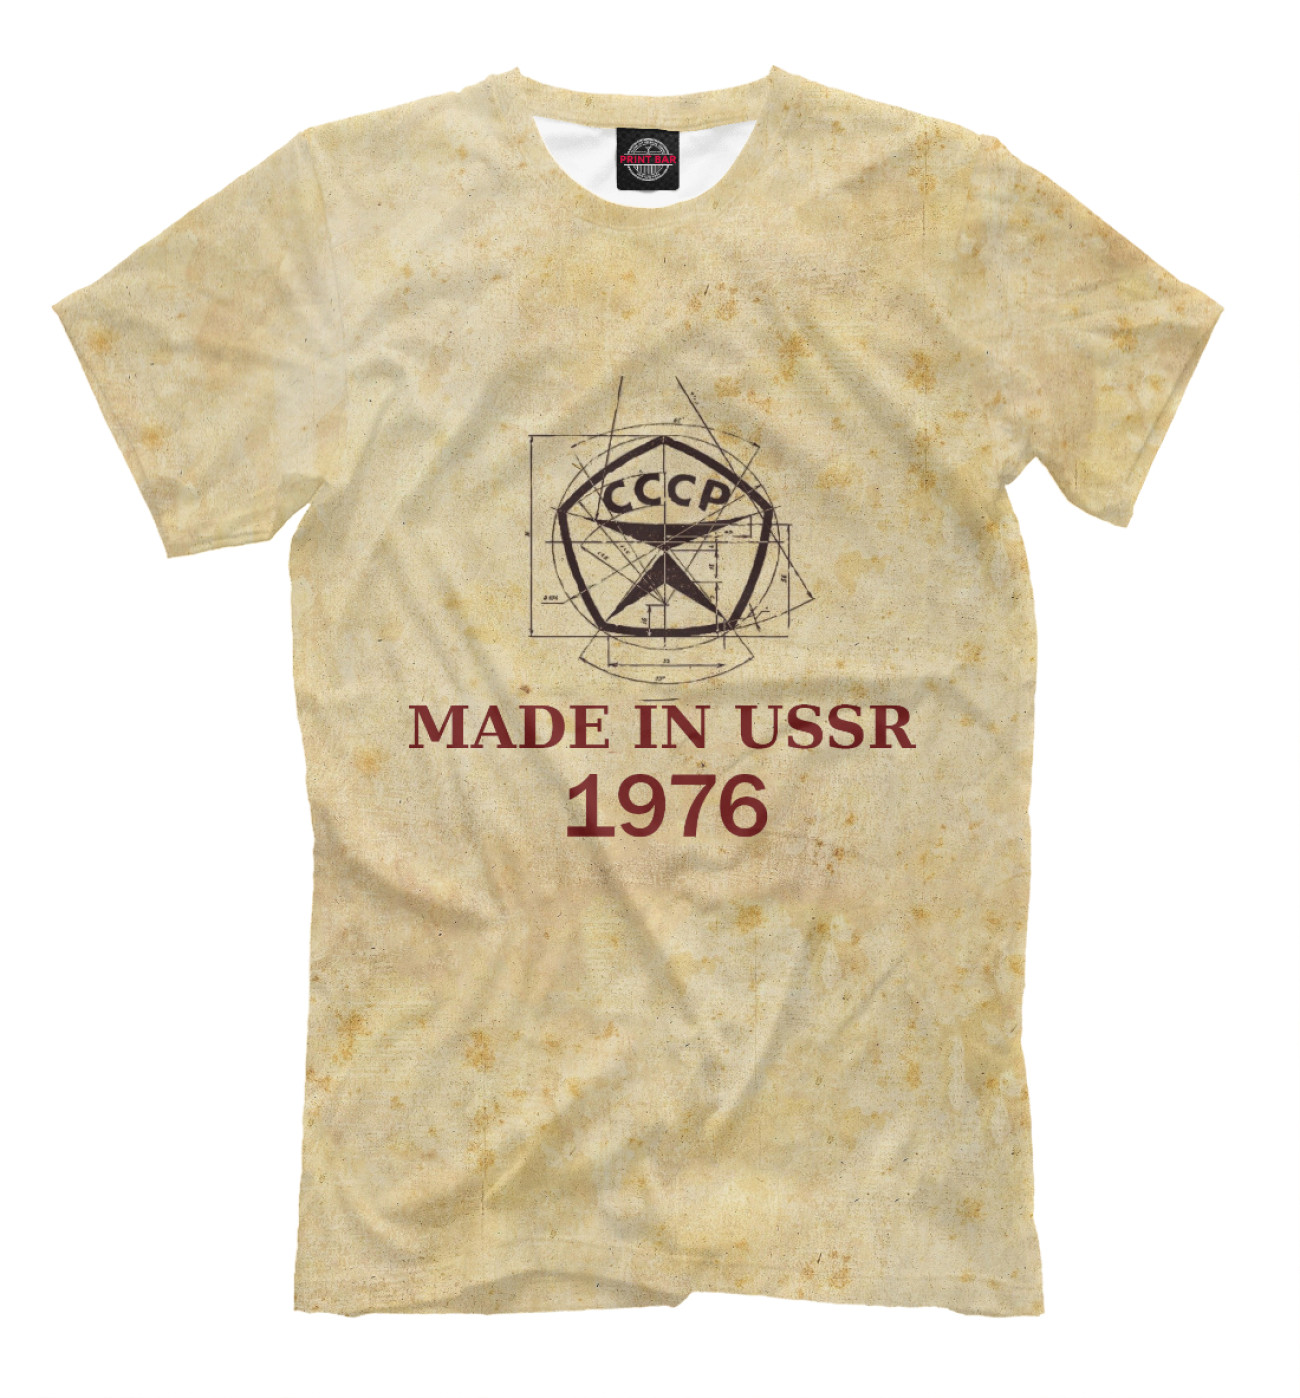 Мужская Футболка Made in СССР - 1976, артикул: DSS-882863-fut-2